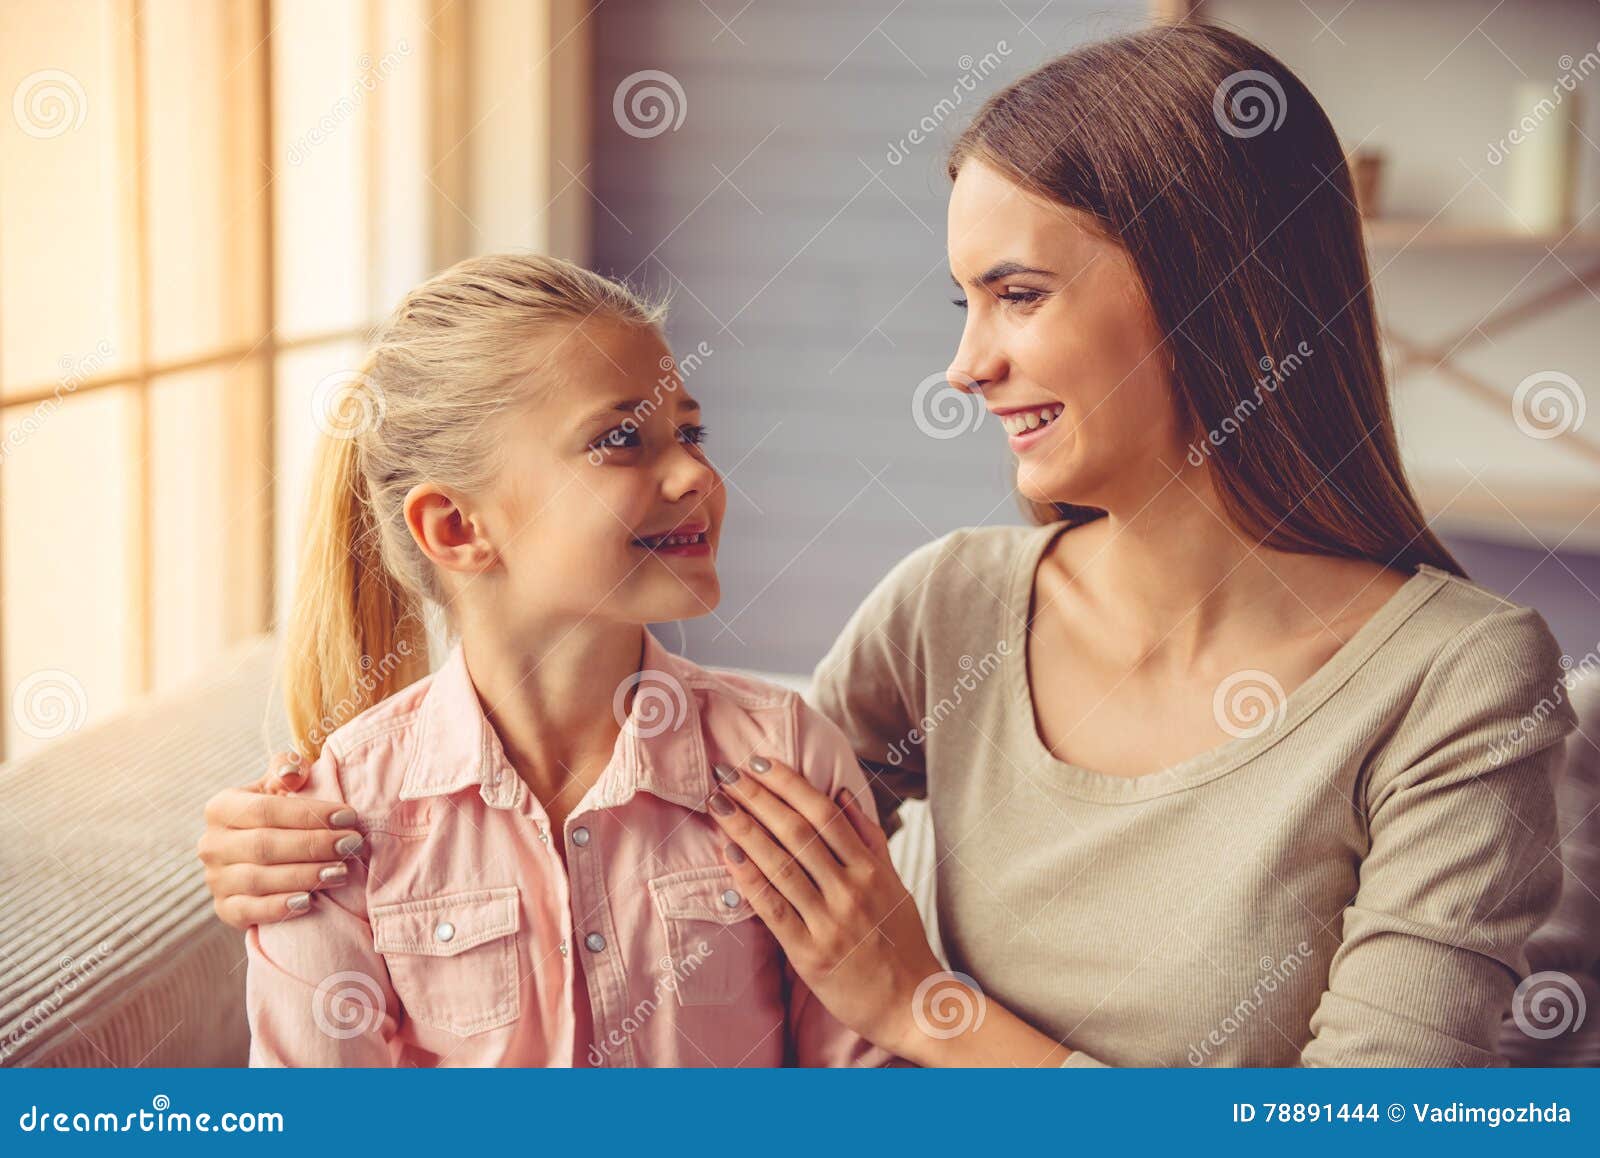 Мама и дочь веб